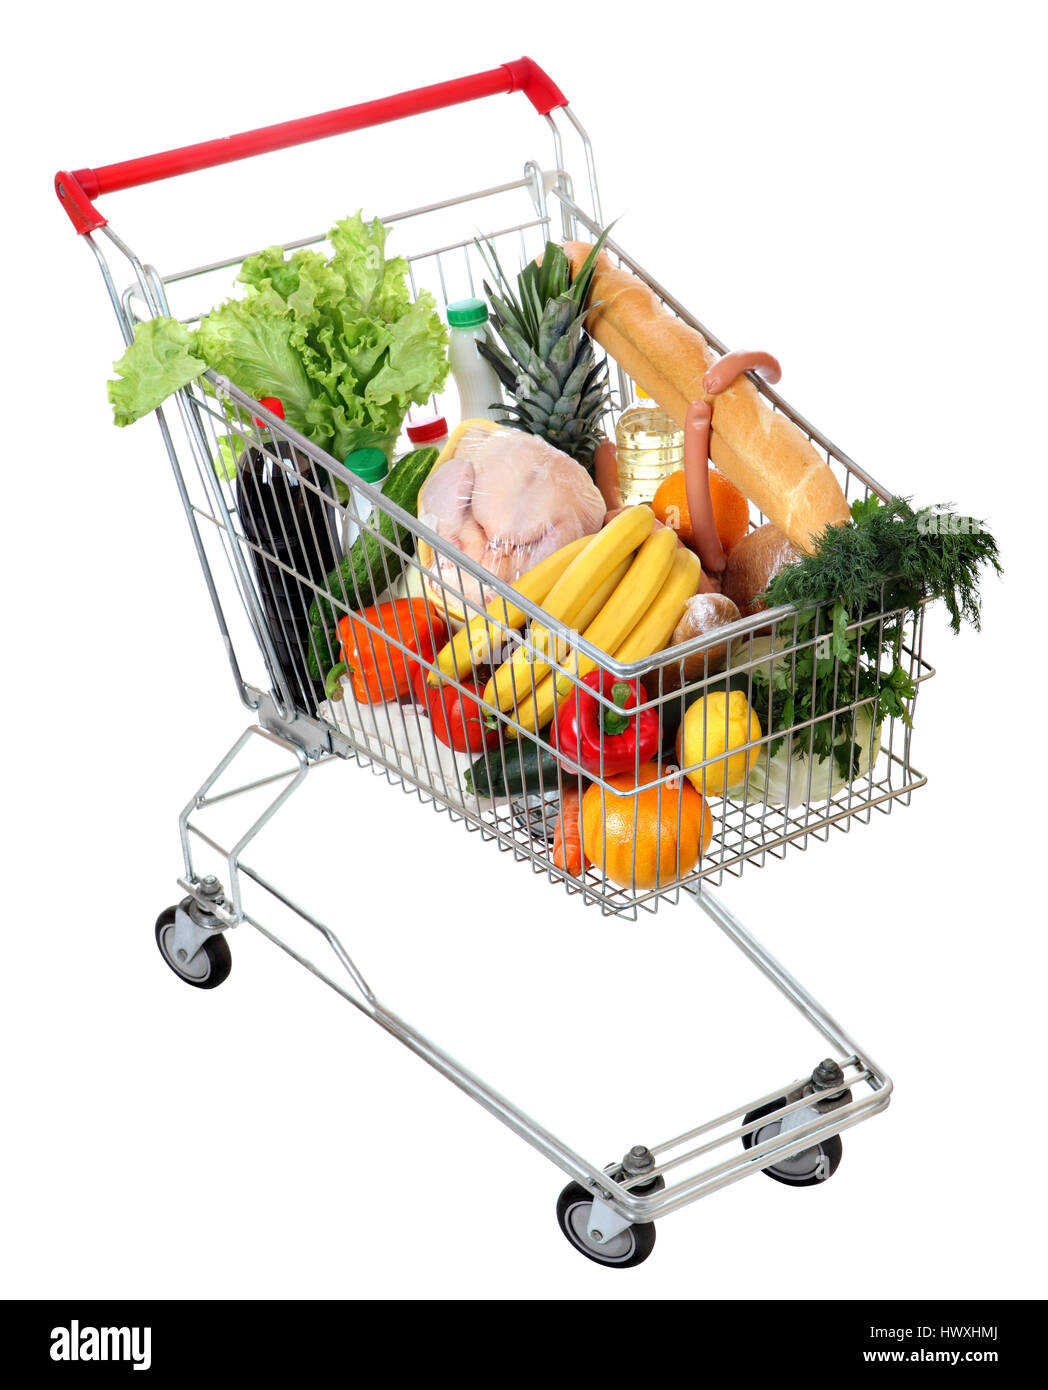 Llena carrito de compras, carrito de supermercado lleno de comida